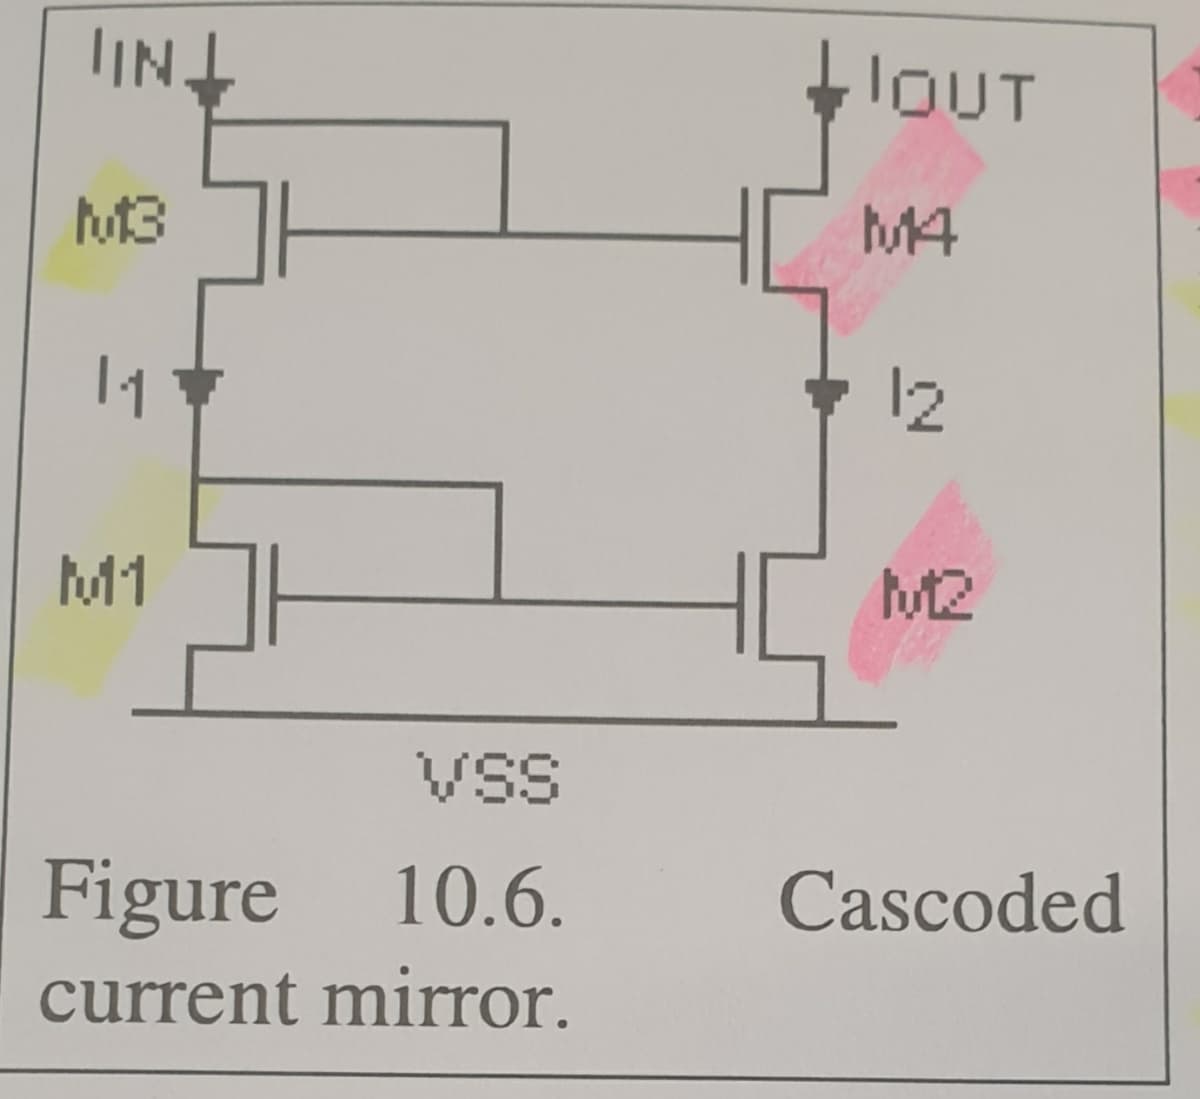 INI
IOUT
M3
M4
11
12
M1
M2
VSS
Figure
10.6.
Cascoded
current mirror.
